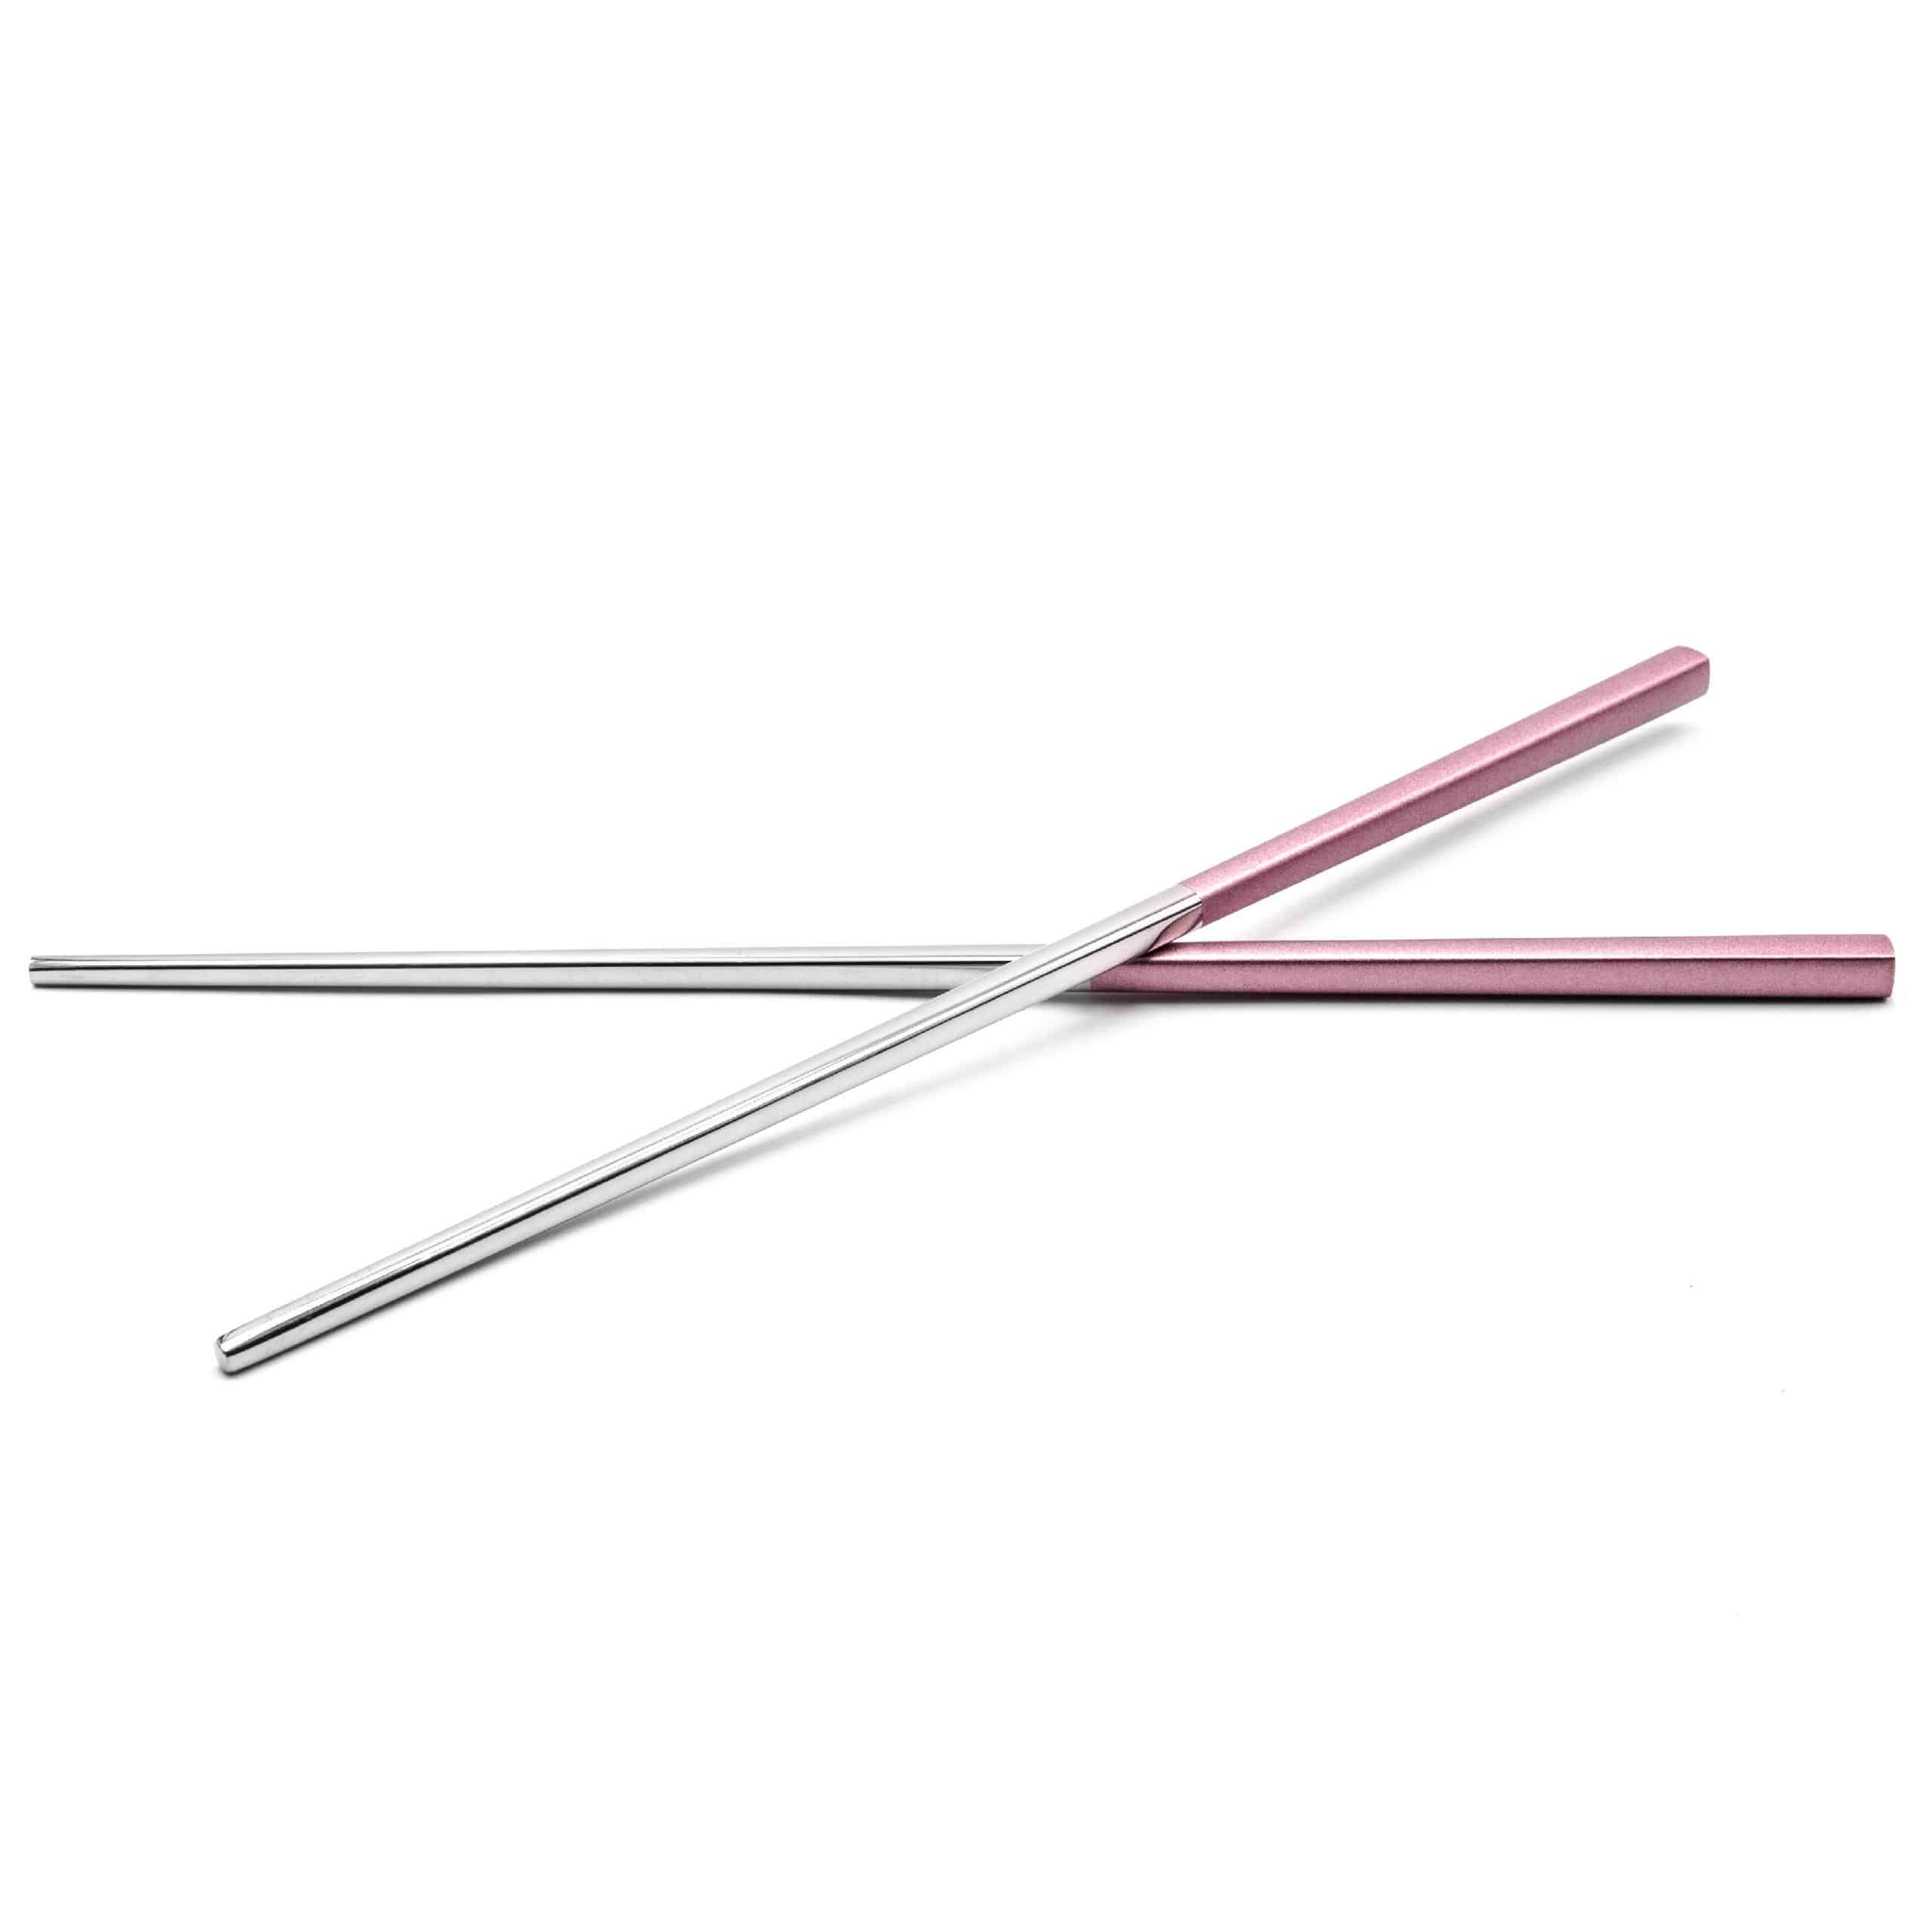 Chopstick Set (1 Pair) - Stainless Steel, pink, silver, 23 cm long, Reusable